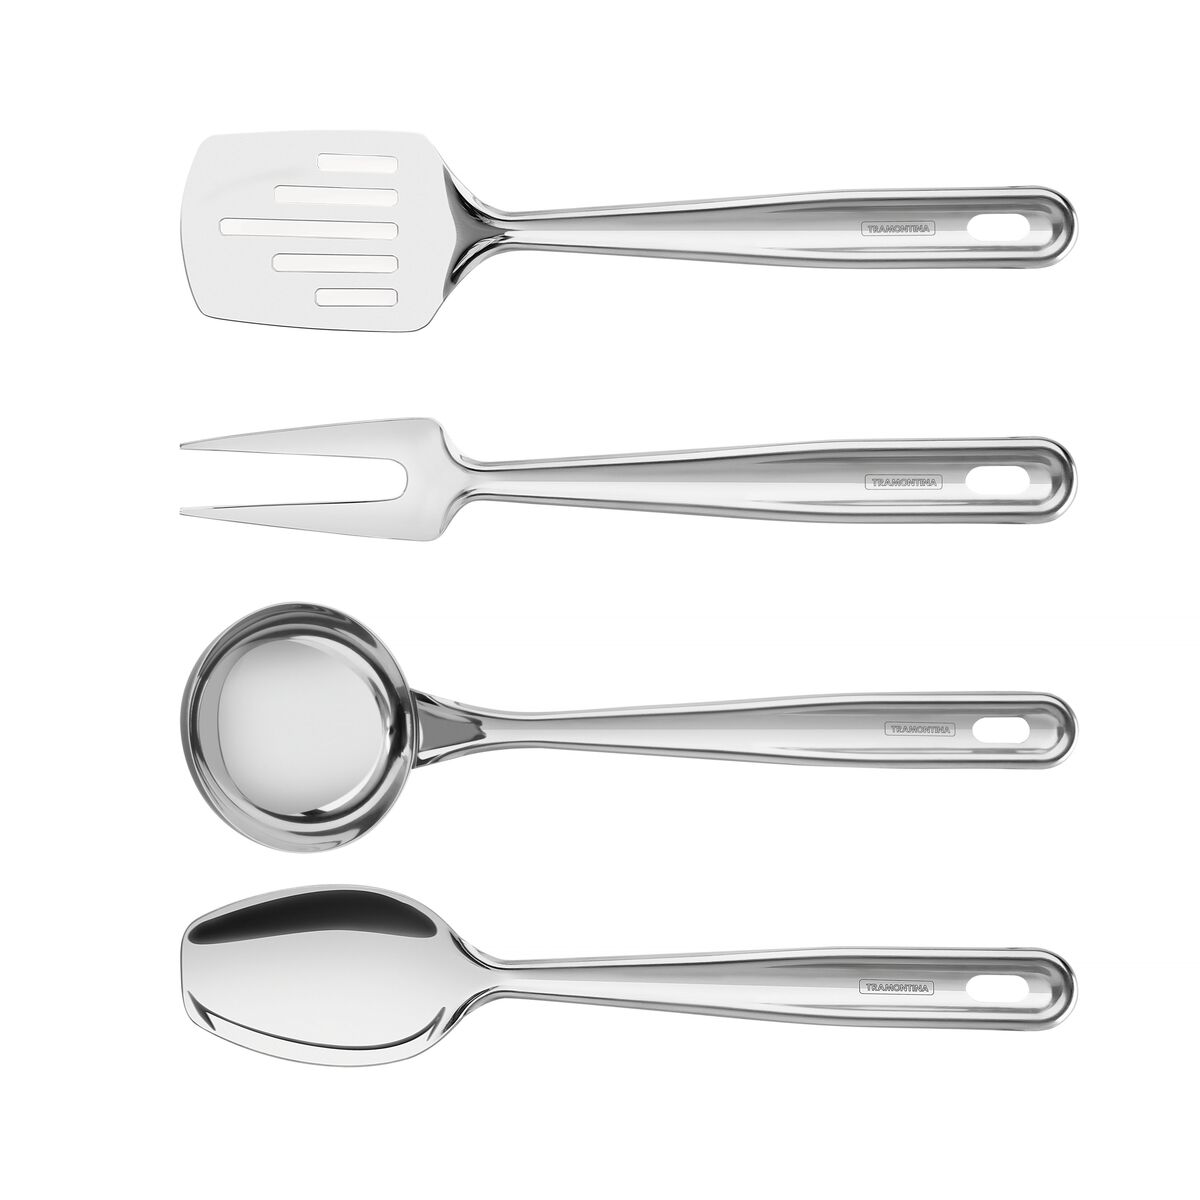 Tramontina Extrata stainless steel utensil set, 4 pc set